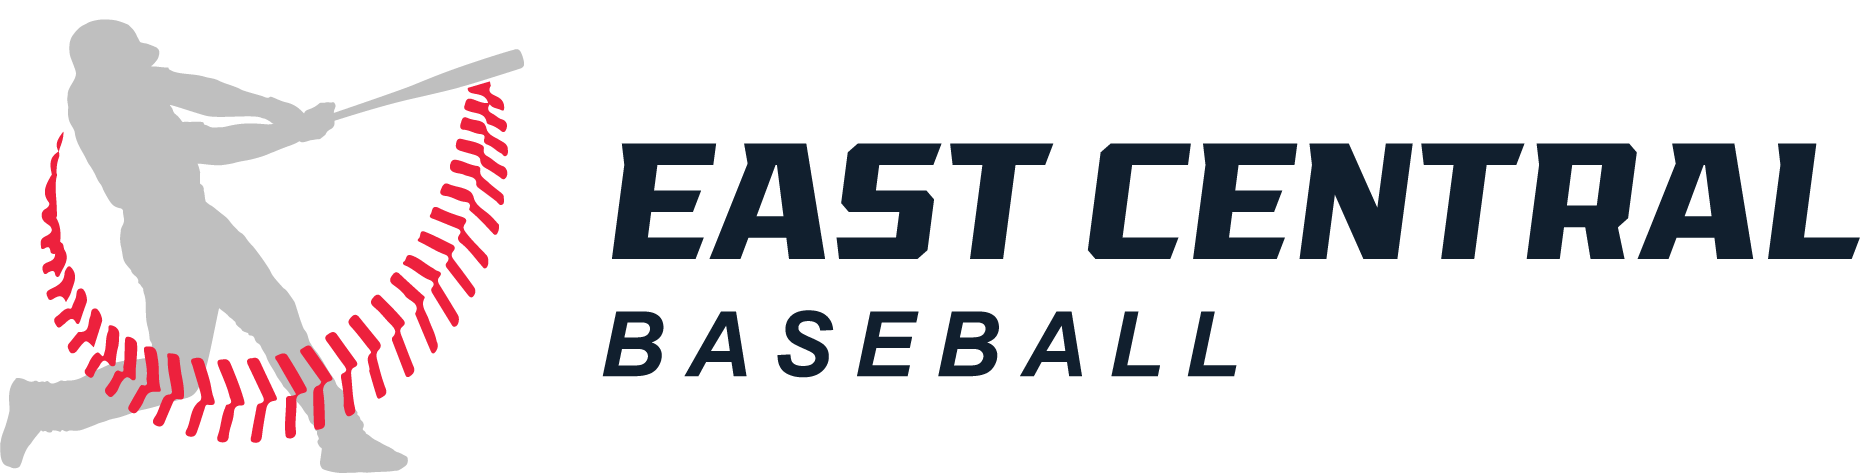 East Central Baseball – Champaign, IL